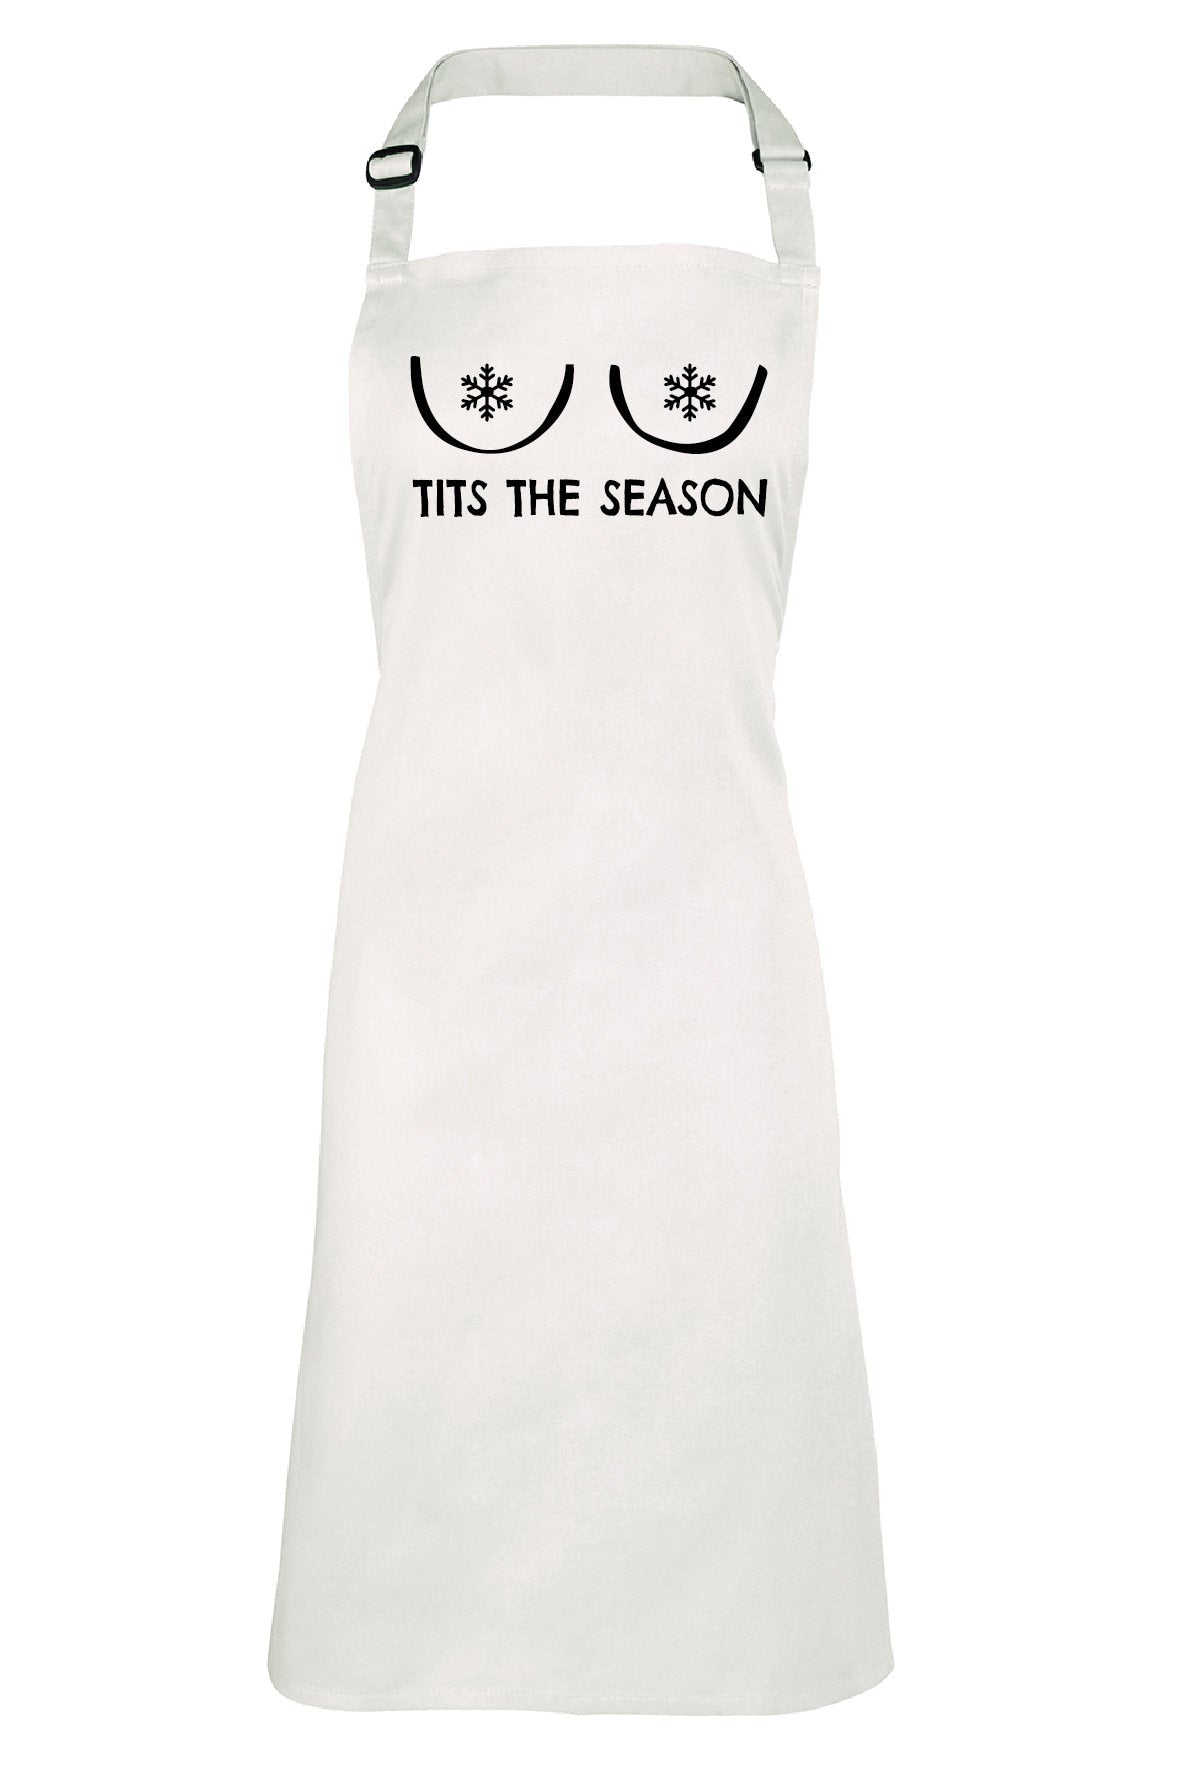 Tits the Season B Apron PR150 | Funny Rude Christmas Apron | Xmas Dinner | Kitchen | Boobs